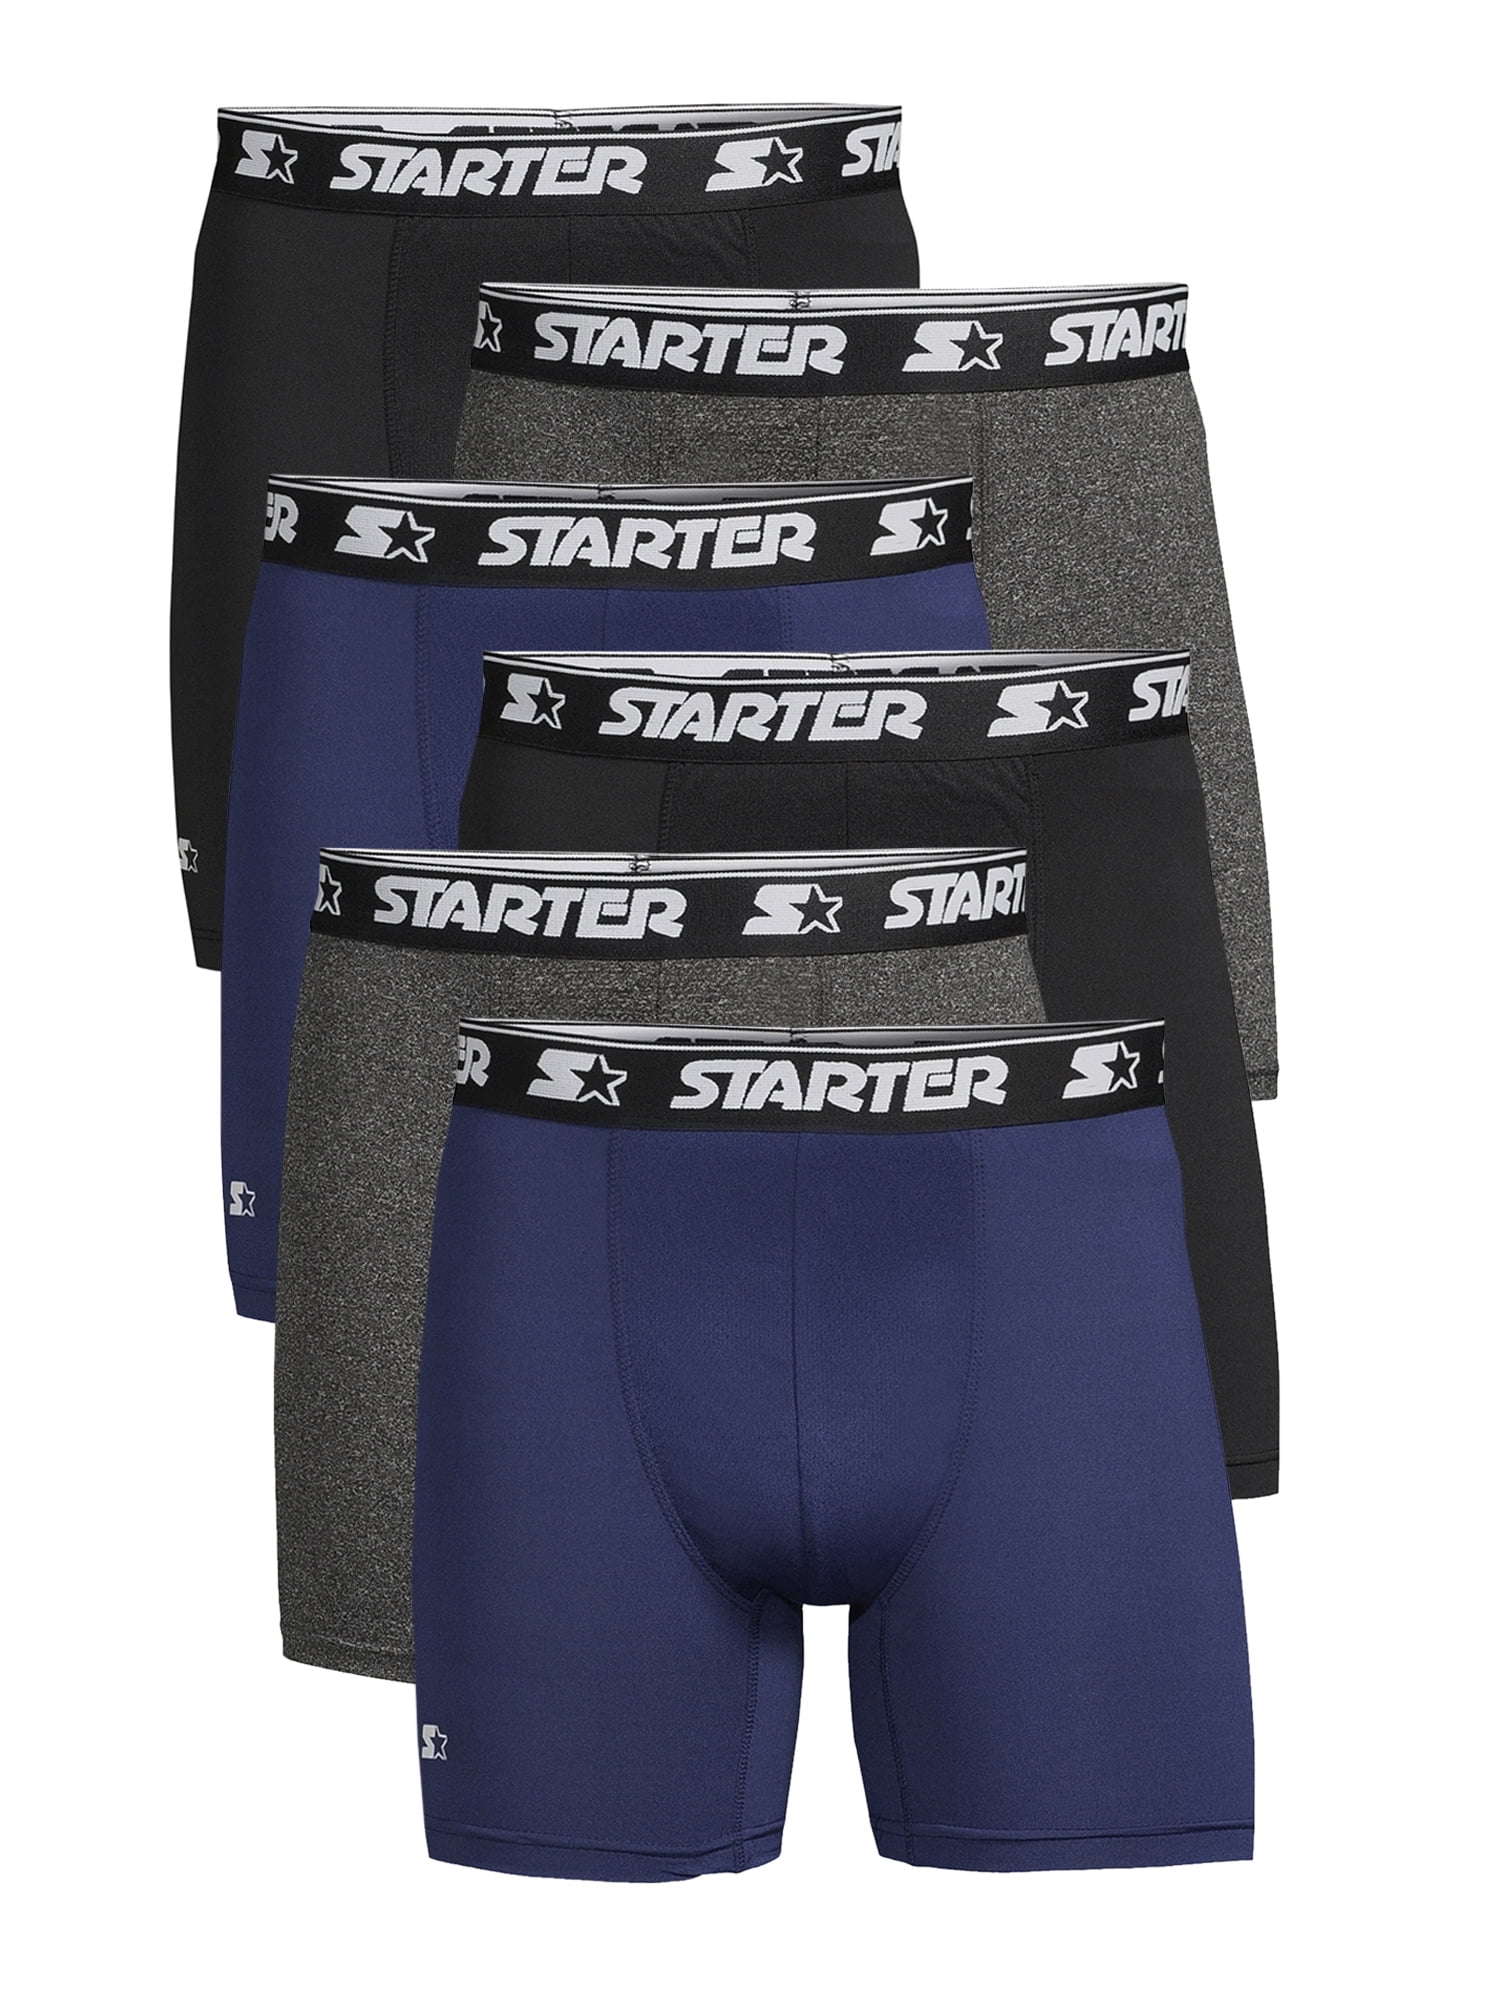 Starter Men's Cotton Stretch Boxer Briefs, 6-Pack 